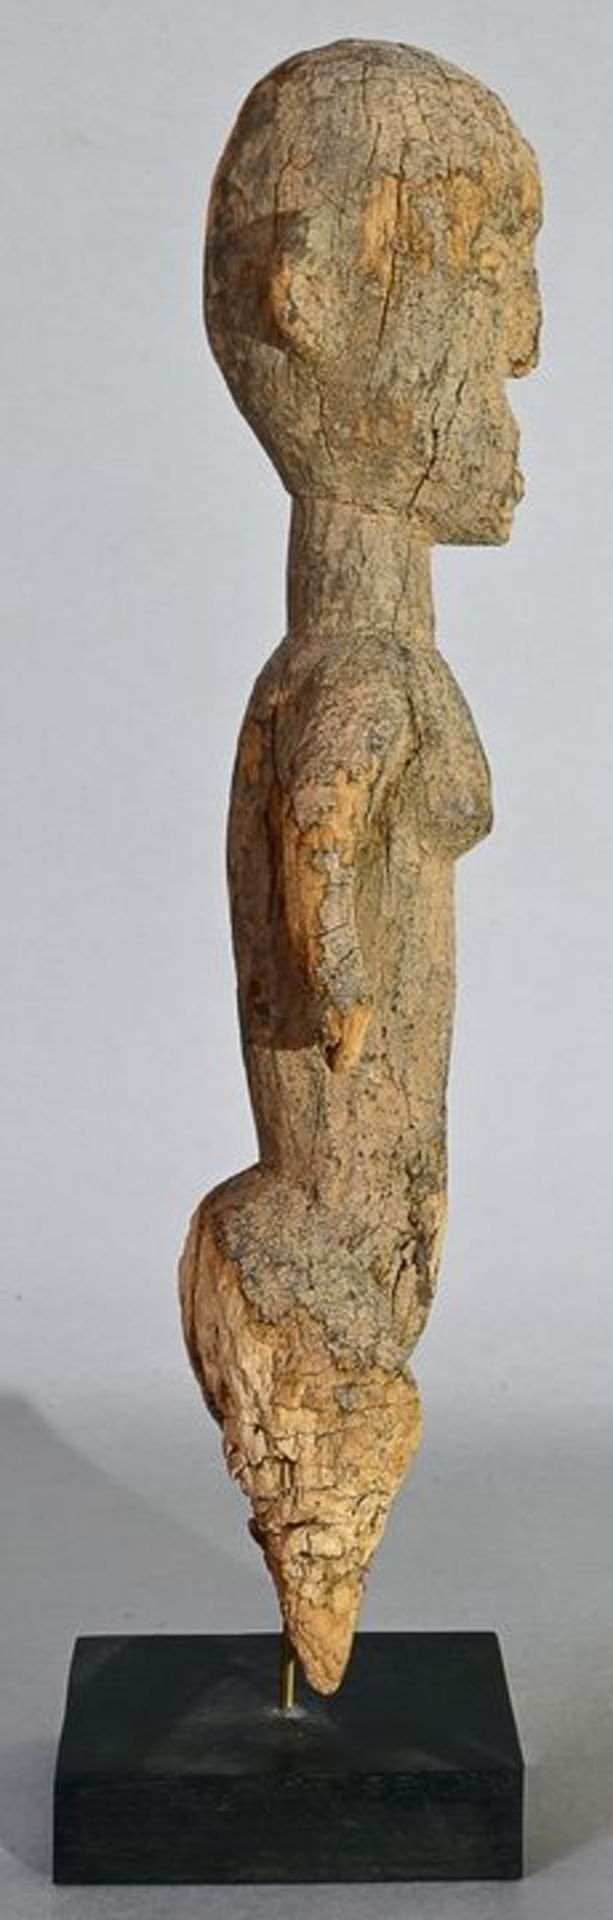 Lobi Statuette/ Lobi statue - Image 6 of 7